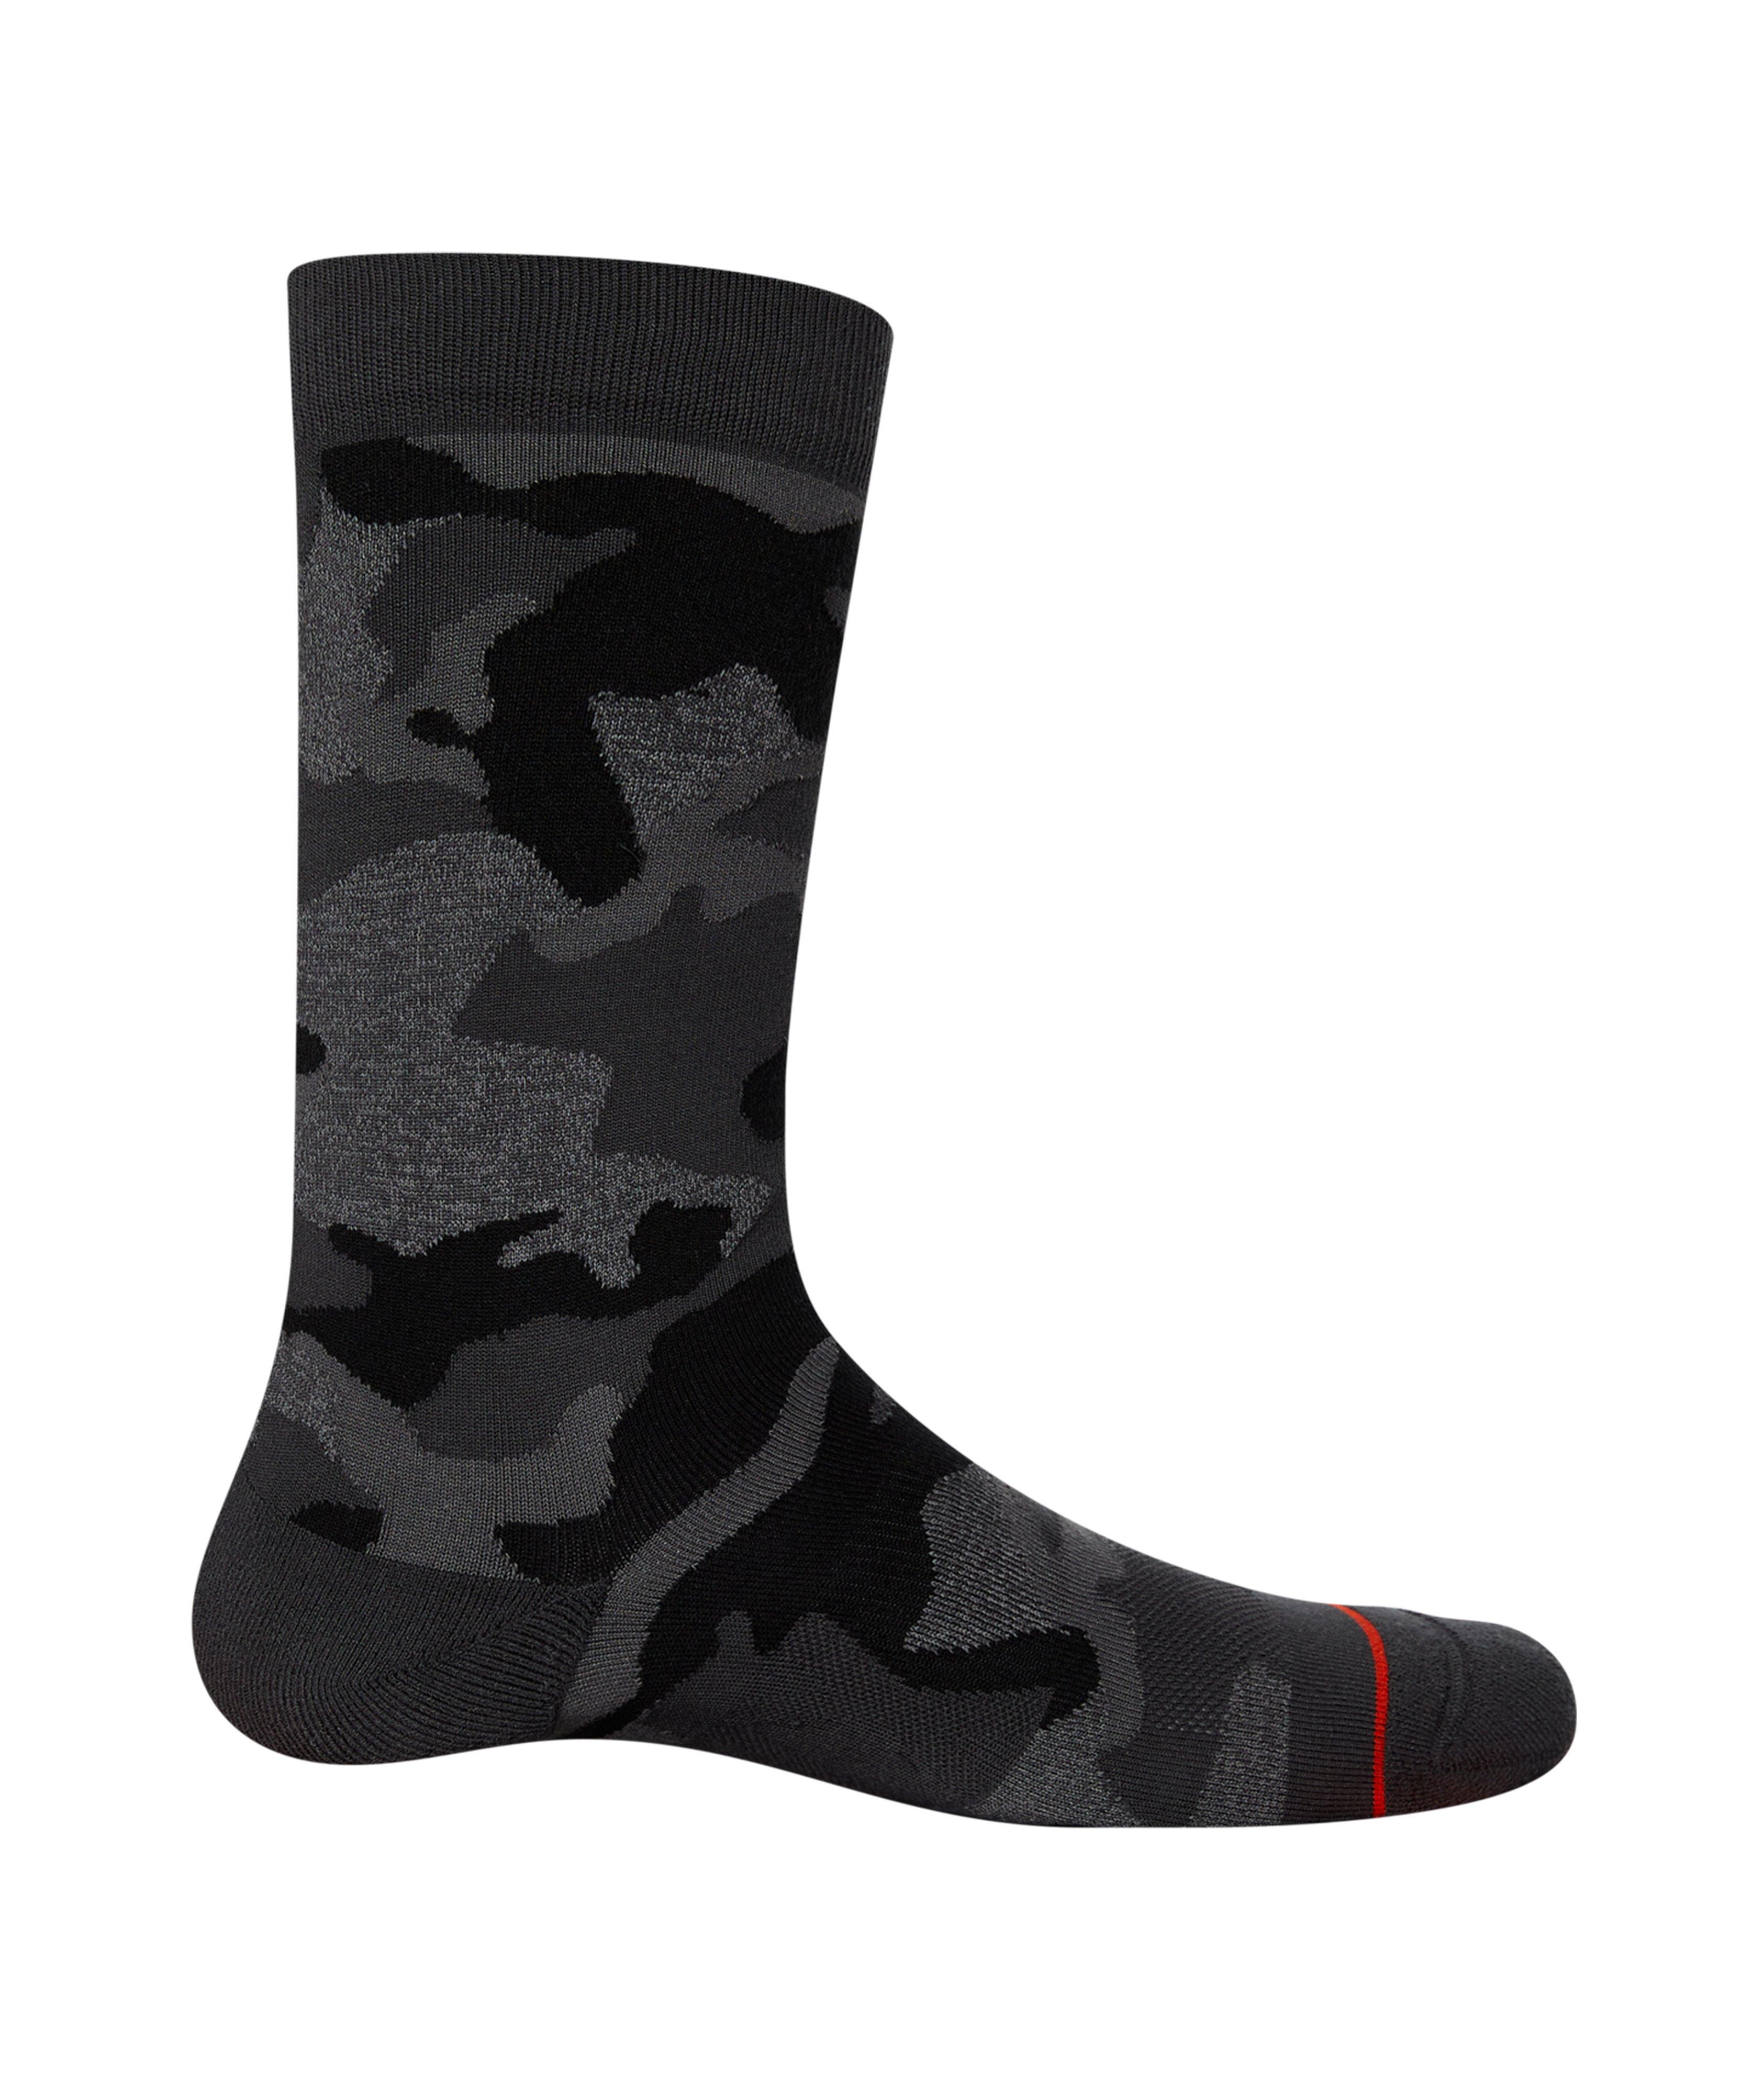 Supersize Camo Print Nylon-Blend Crew Socks image 0